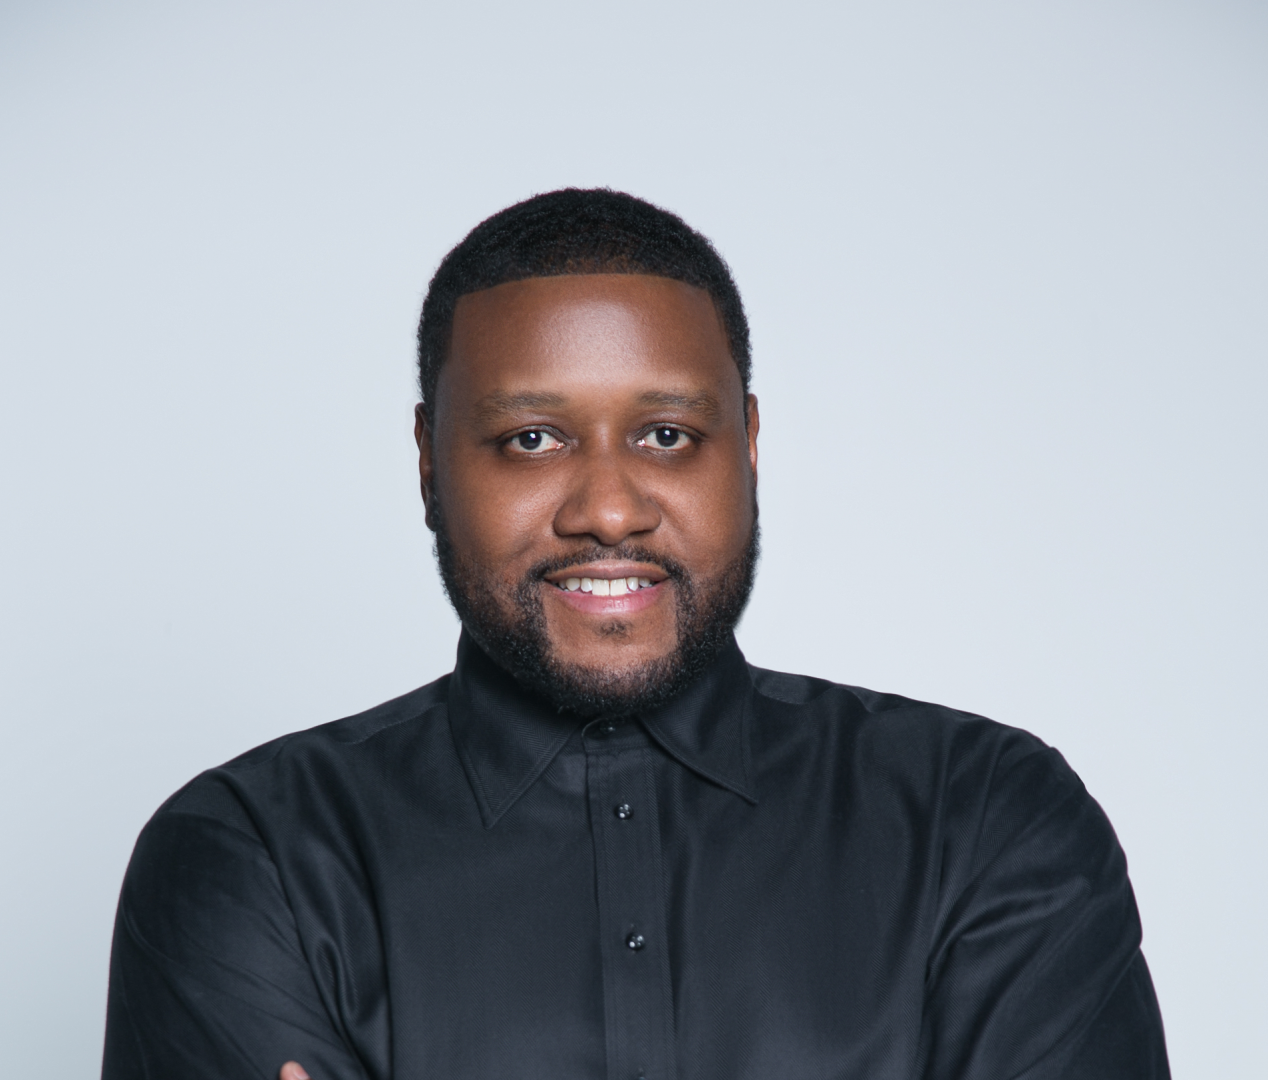 FLOURYSH executive Steve Canal's brilliant economic collaboration helps Black entrepreneurs and brands